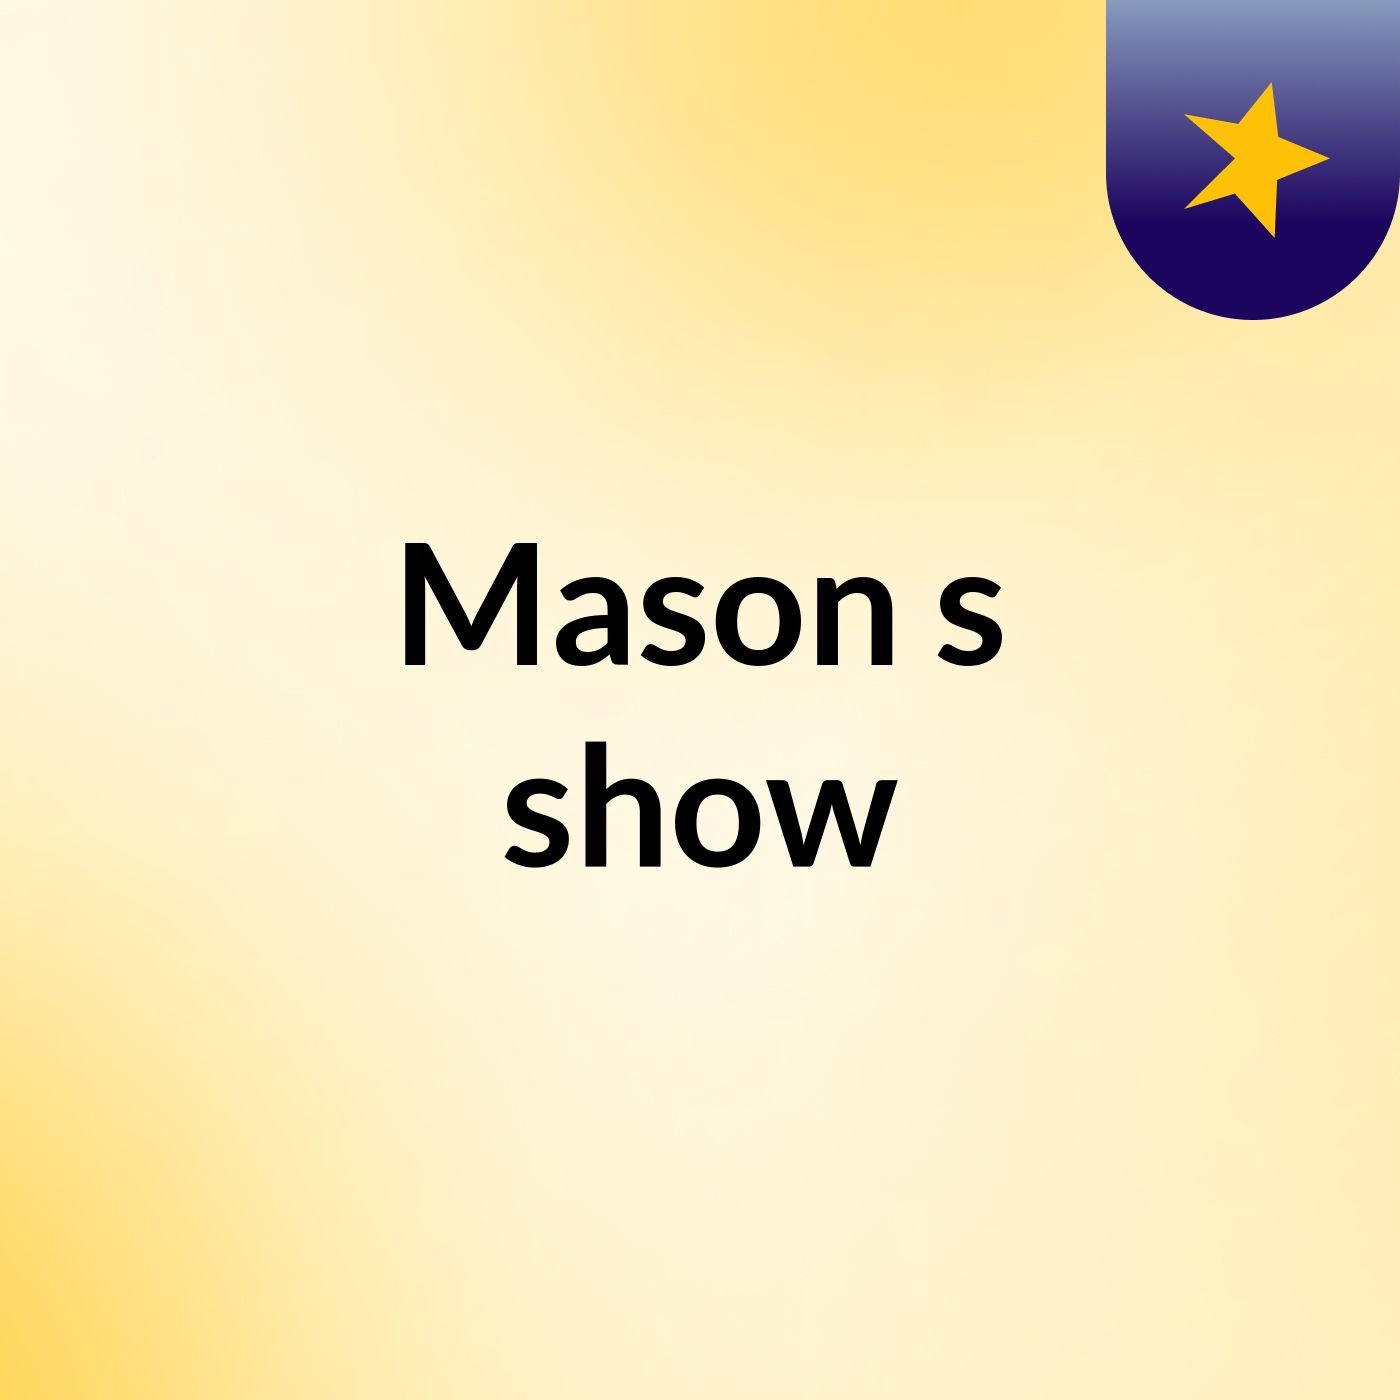 Episode 3 - Mason's show